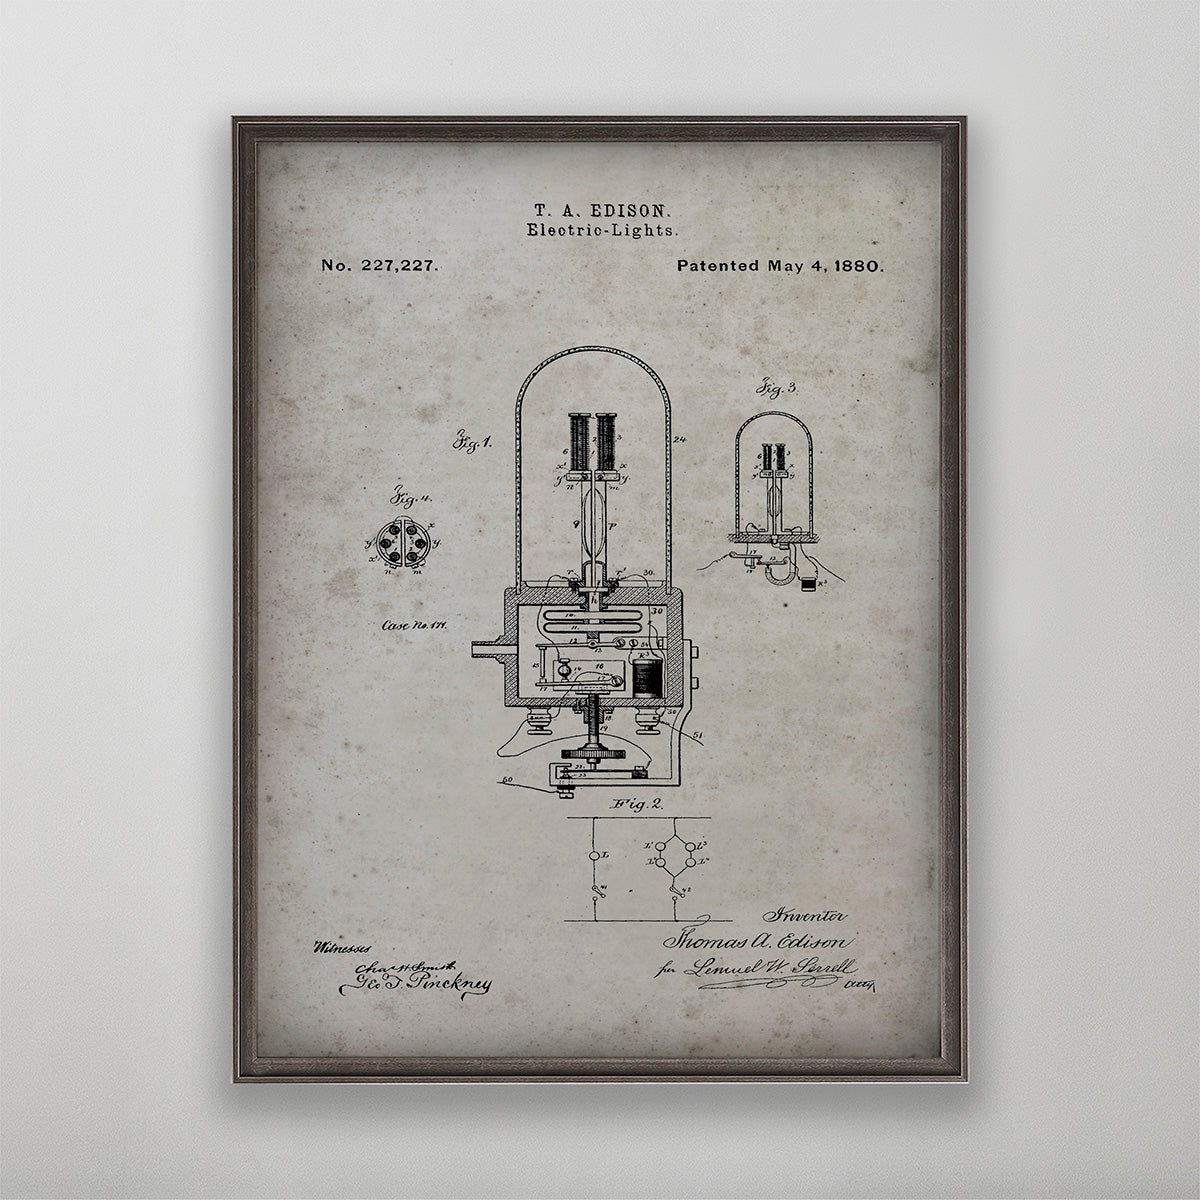 Electric Light Patent c. 1880 Thomas Edison